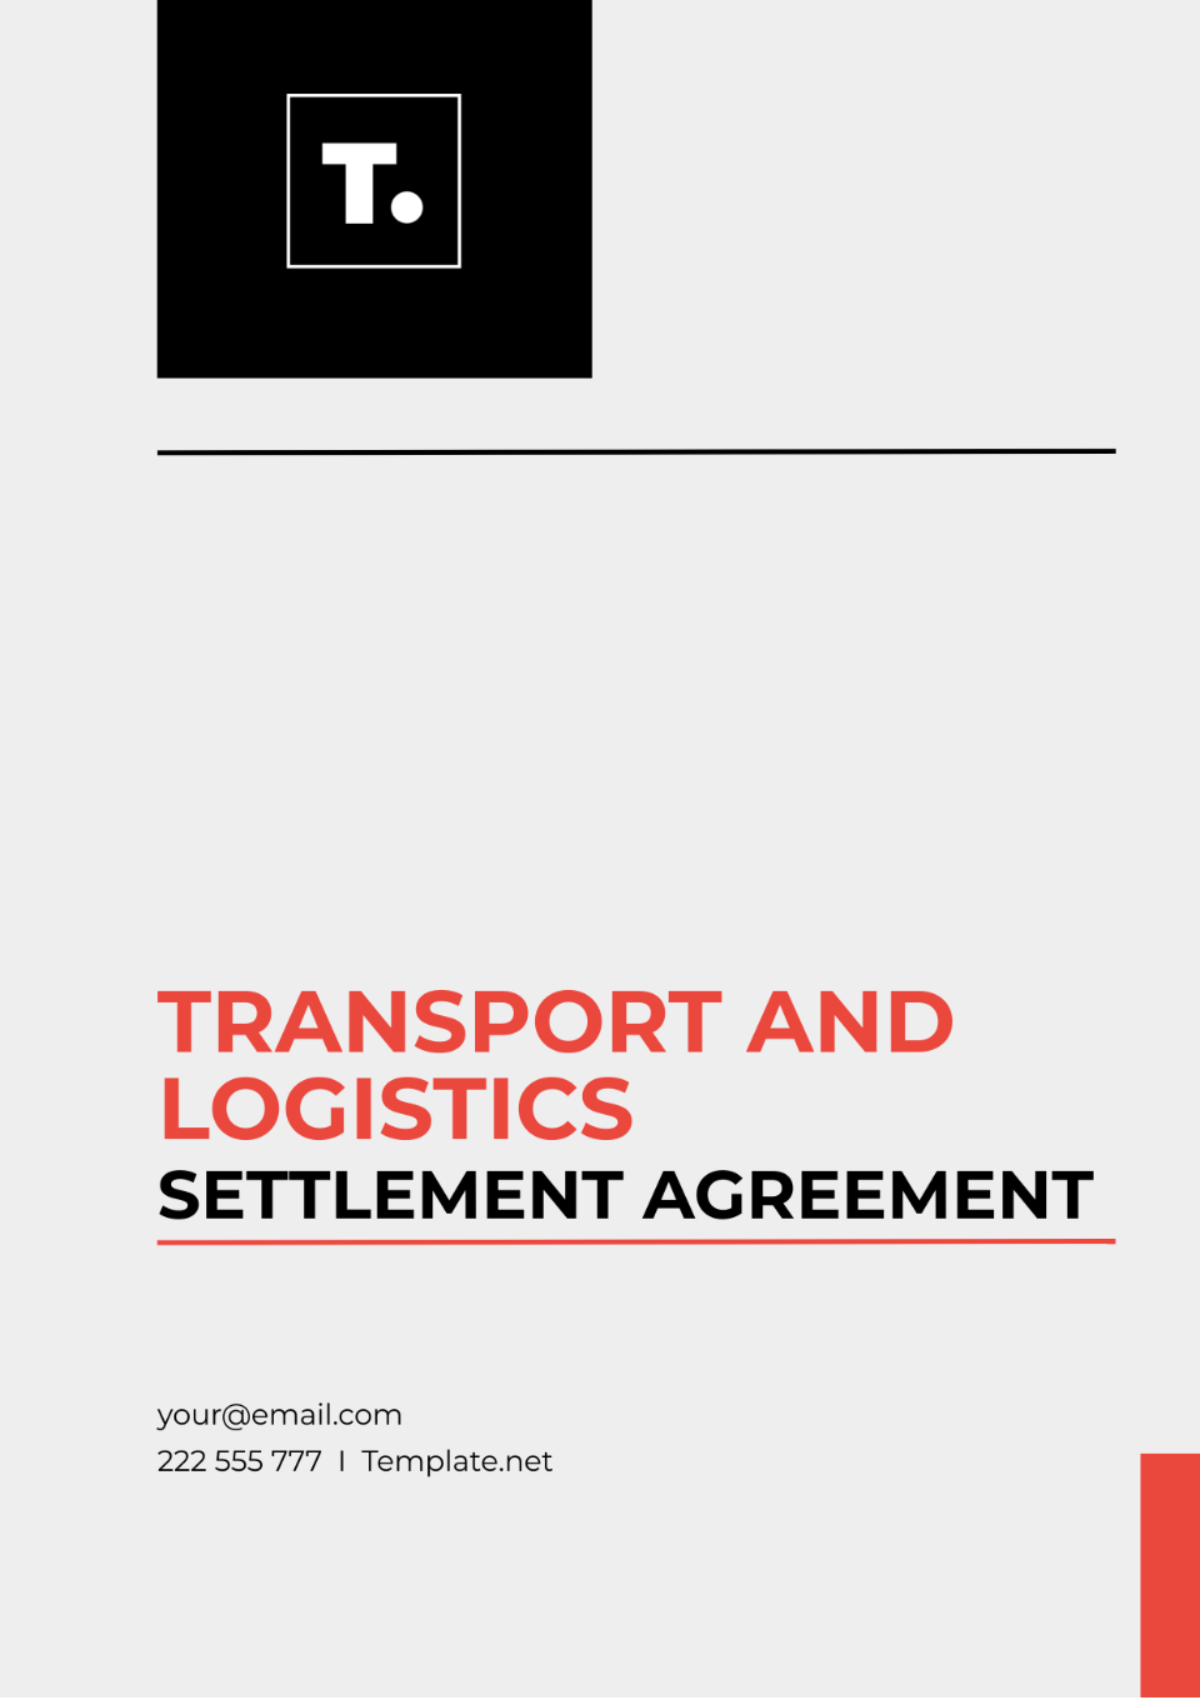 Free Transport and Logistics Settlement Agreement Template